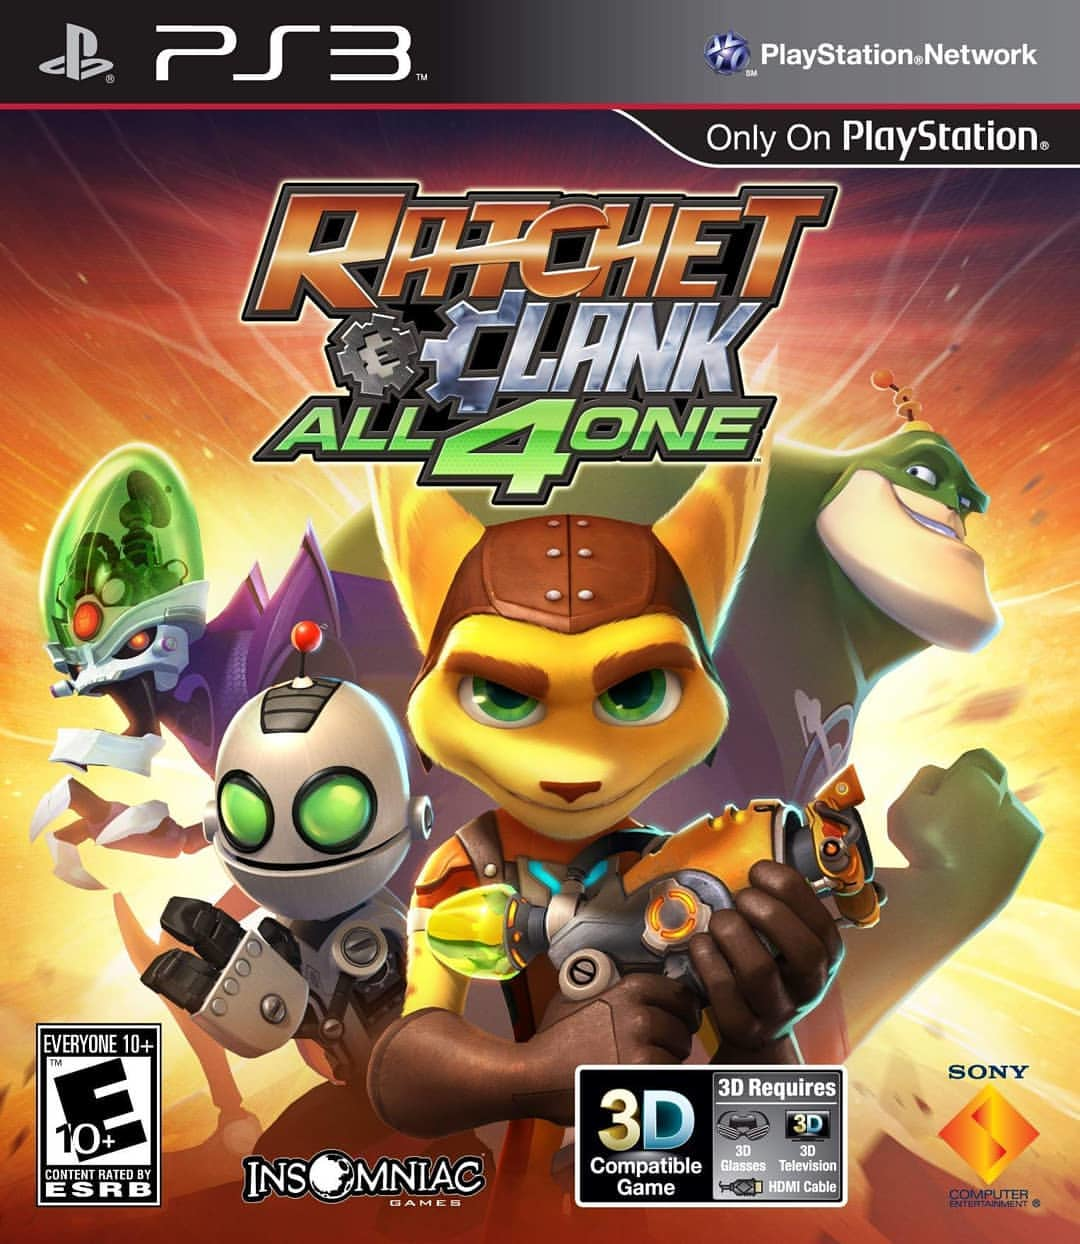 Ratchet & Clank: Going Commando (PlayStation 2) · RetroAchievements